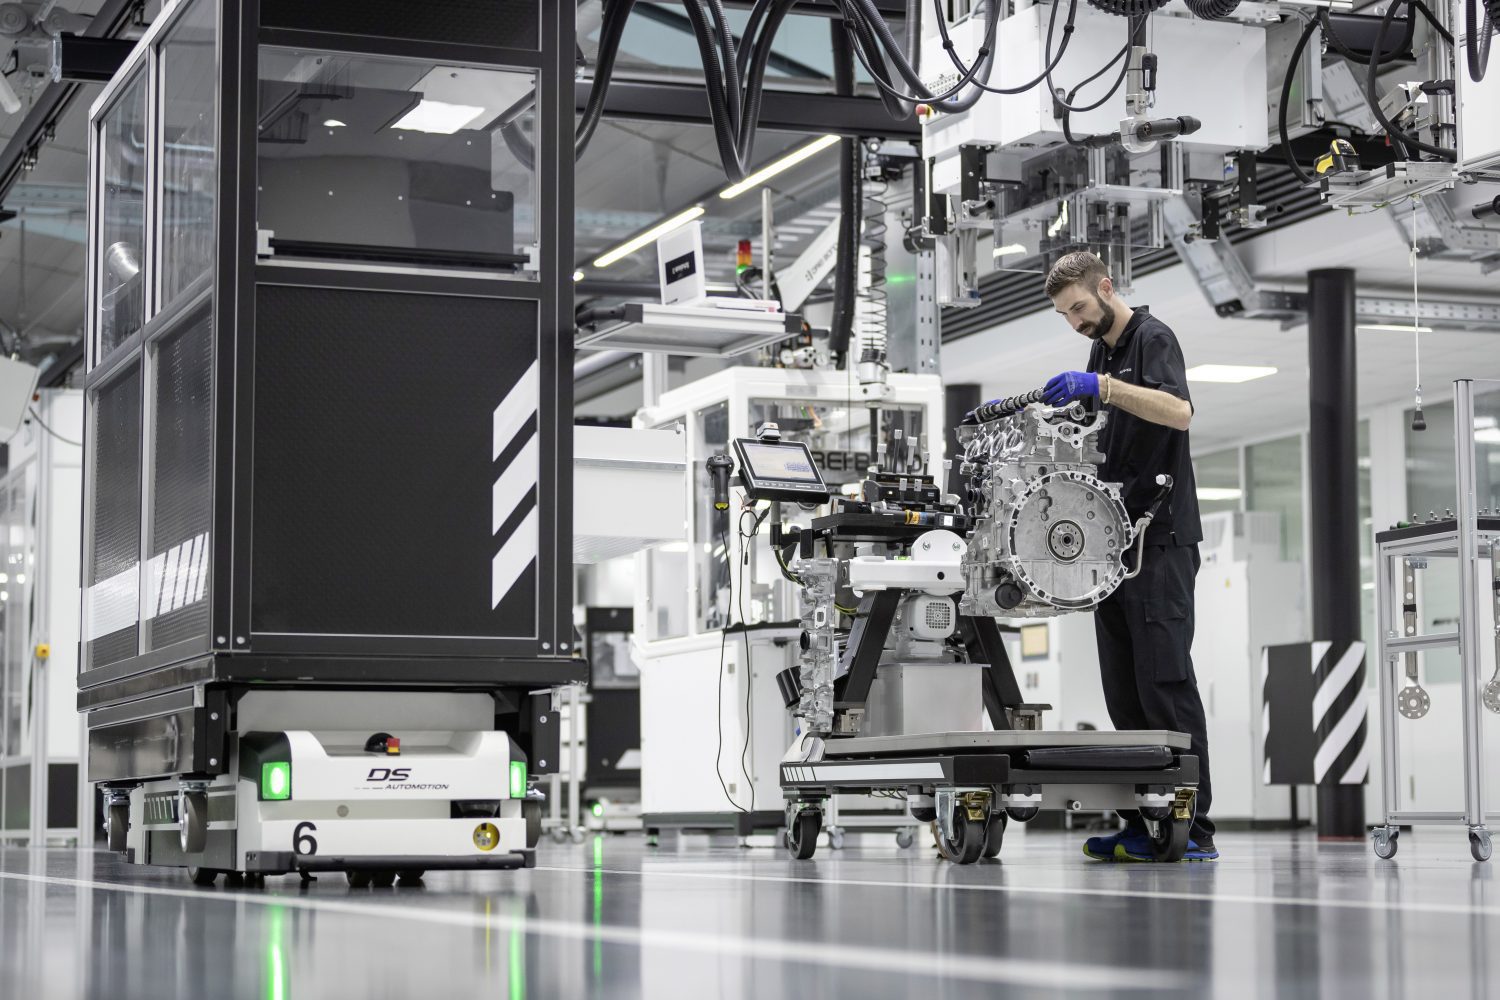 Mercedes-AMG Produktion M139 2019